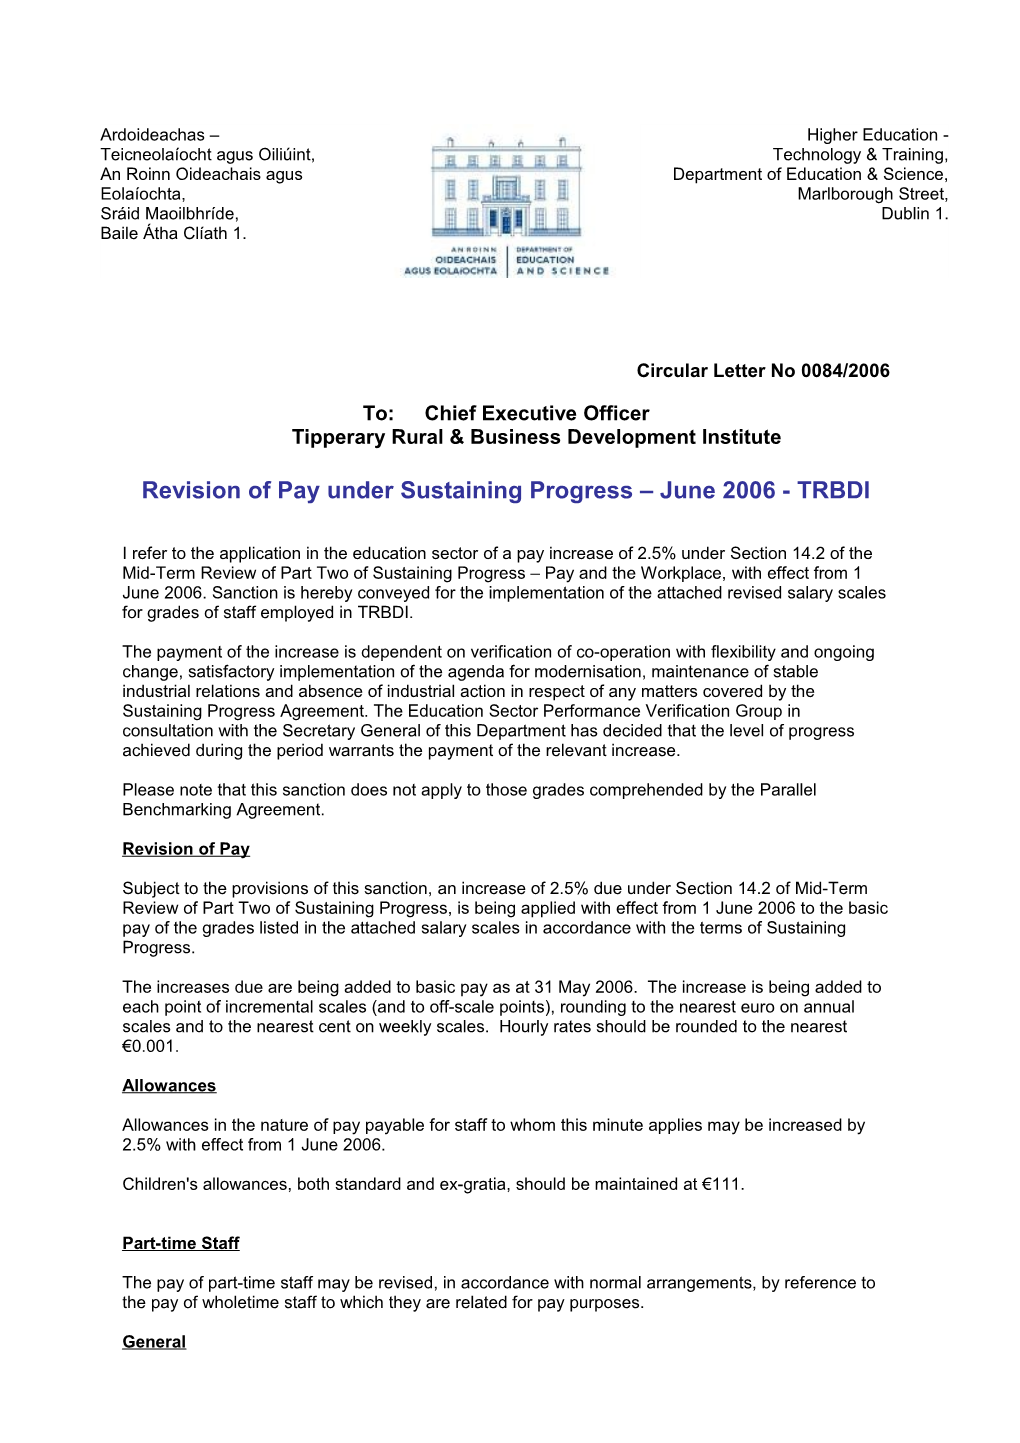 Circular 0084/2006 - Revision of Pay Under Sustaining Progress - June 2006 - Tipperary